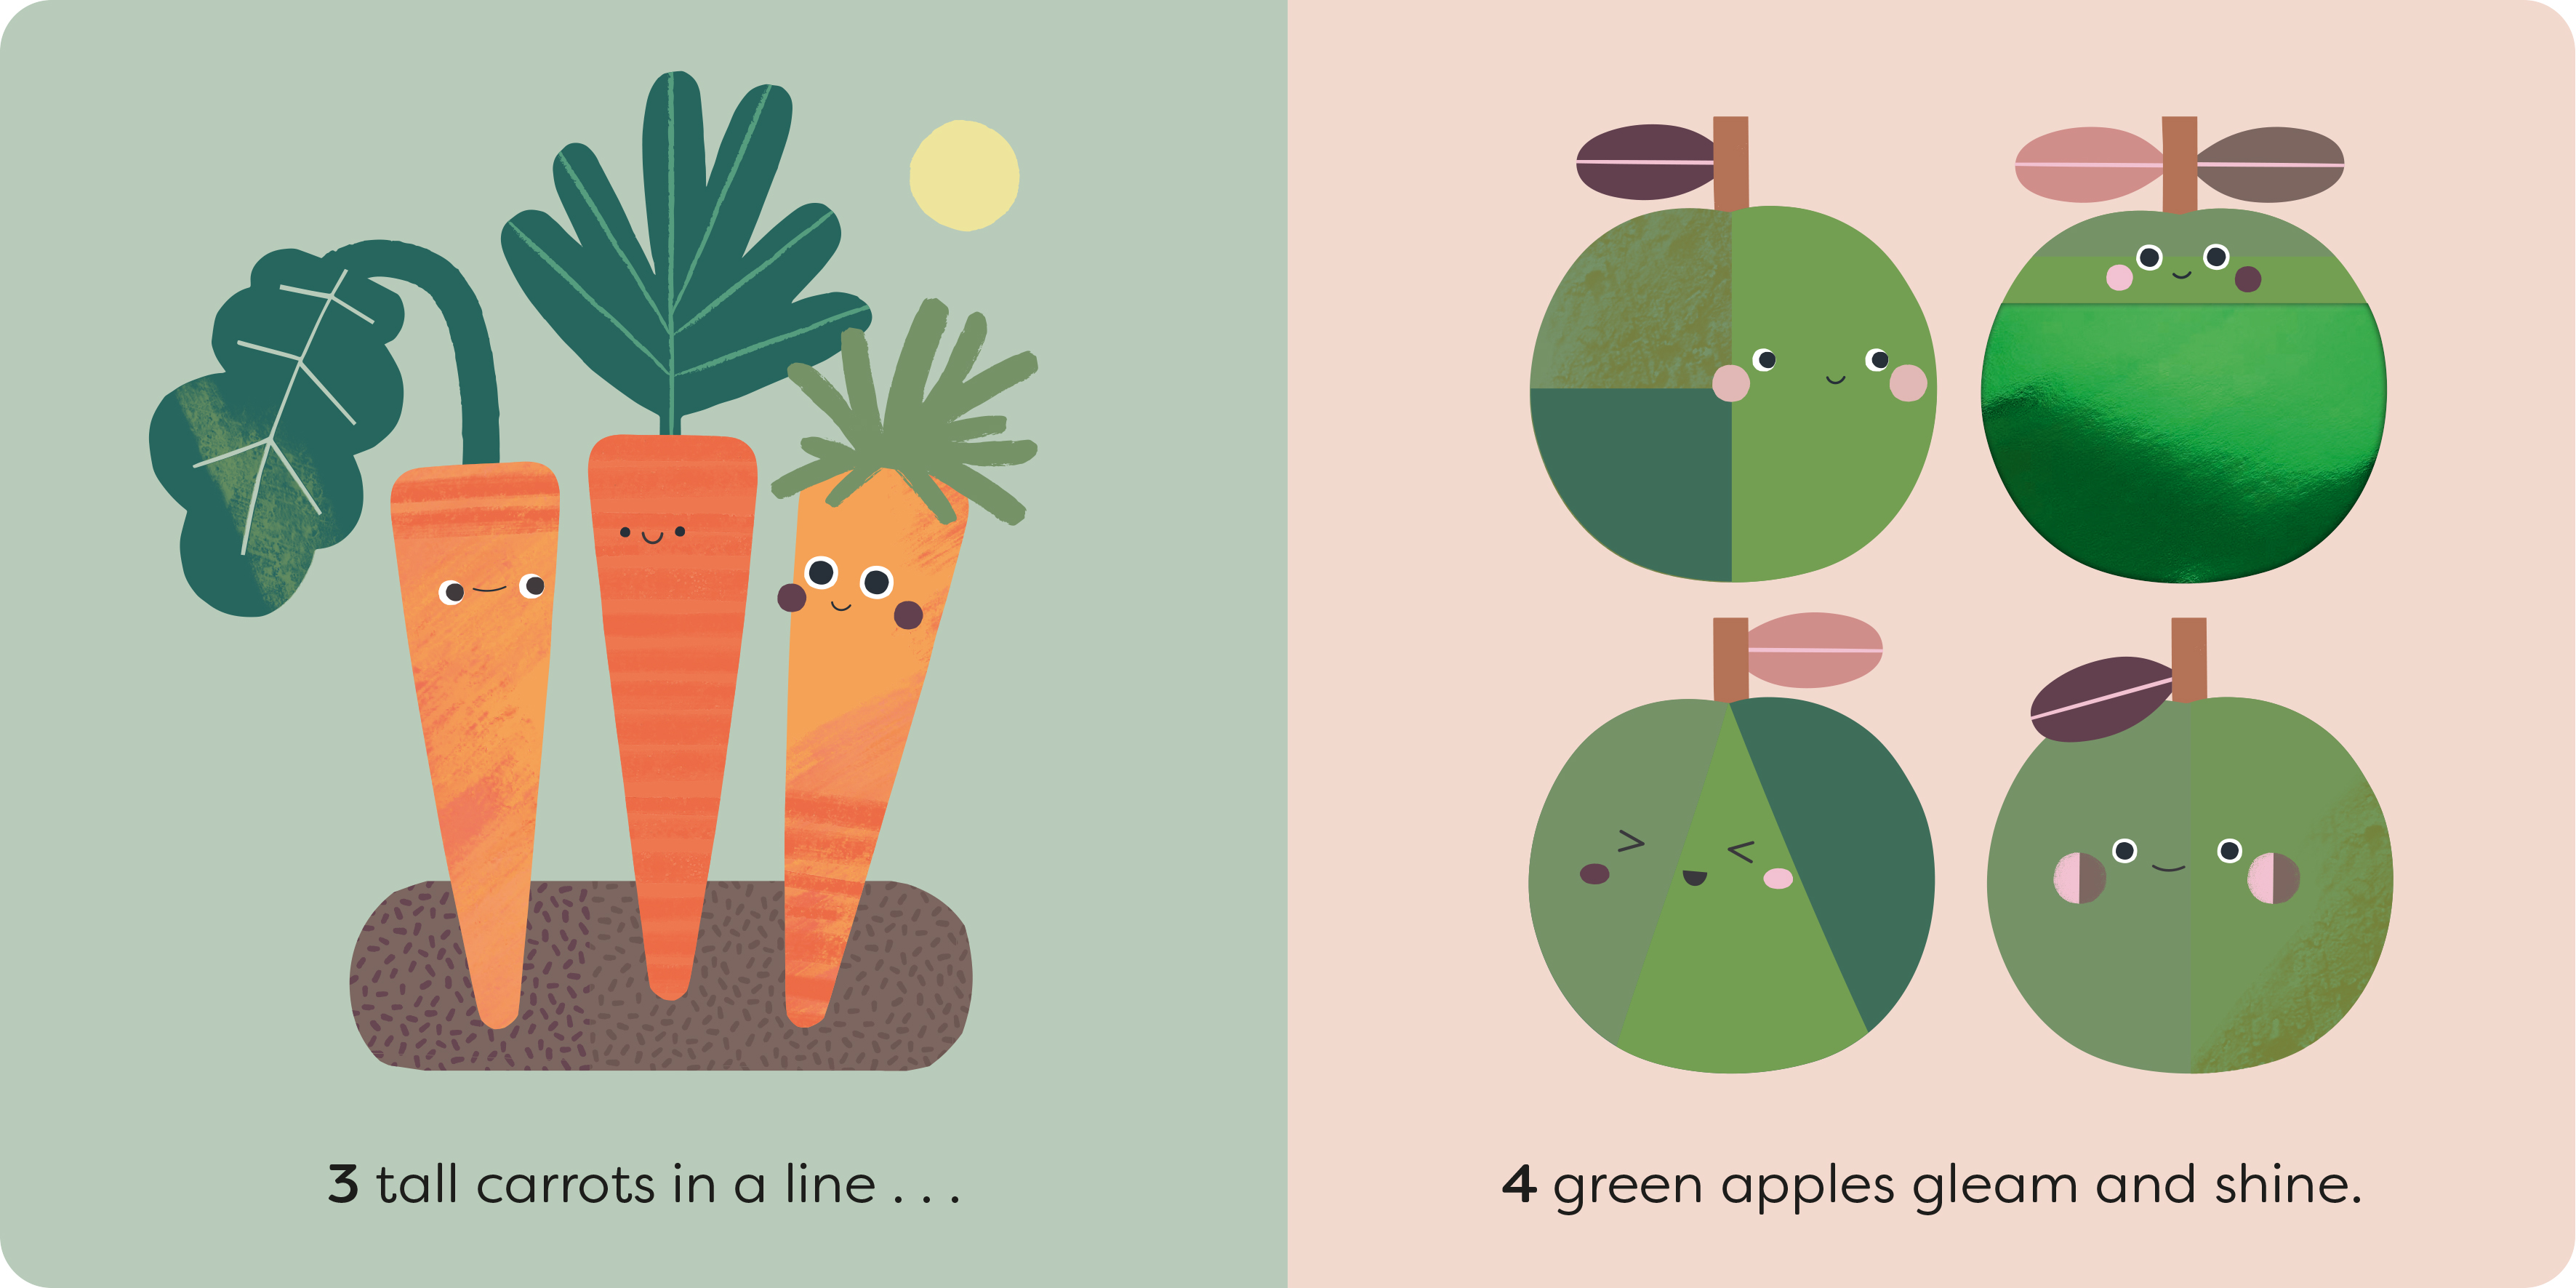 MiniTouch: Fruits & Veggies